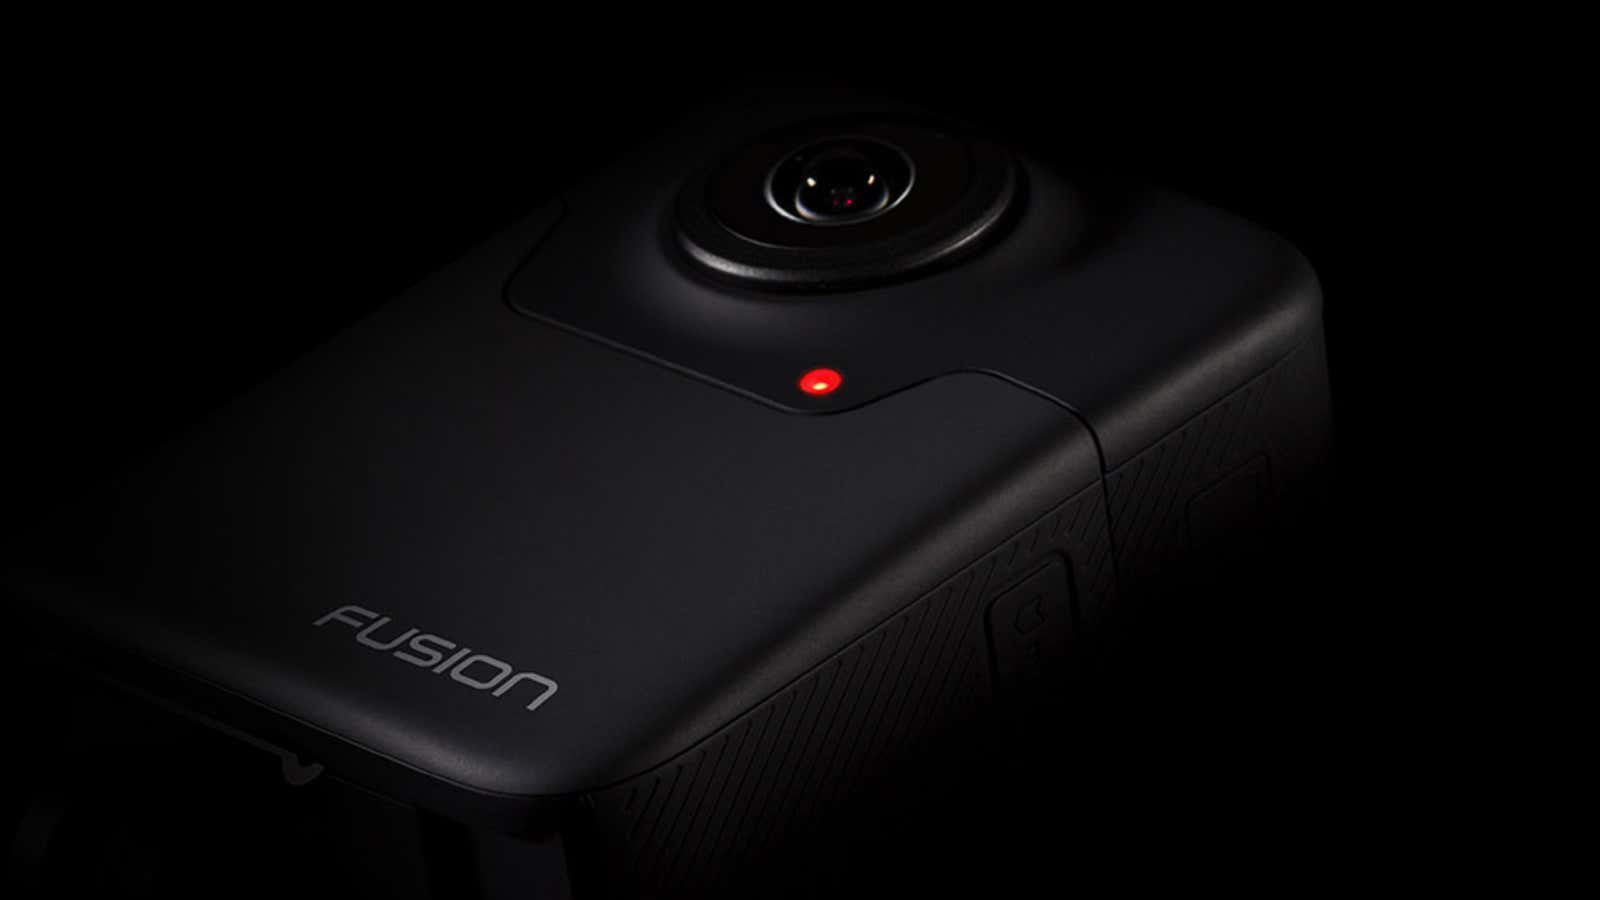 GoPro’s Fusion camera.